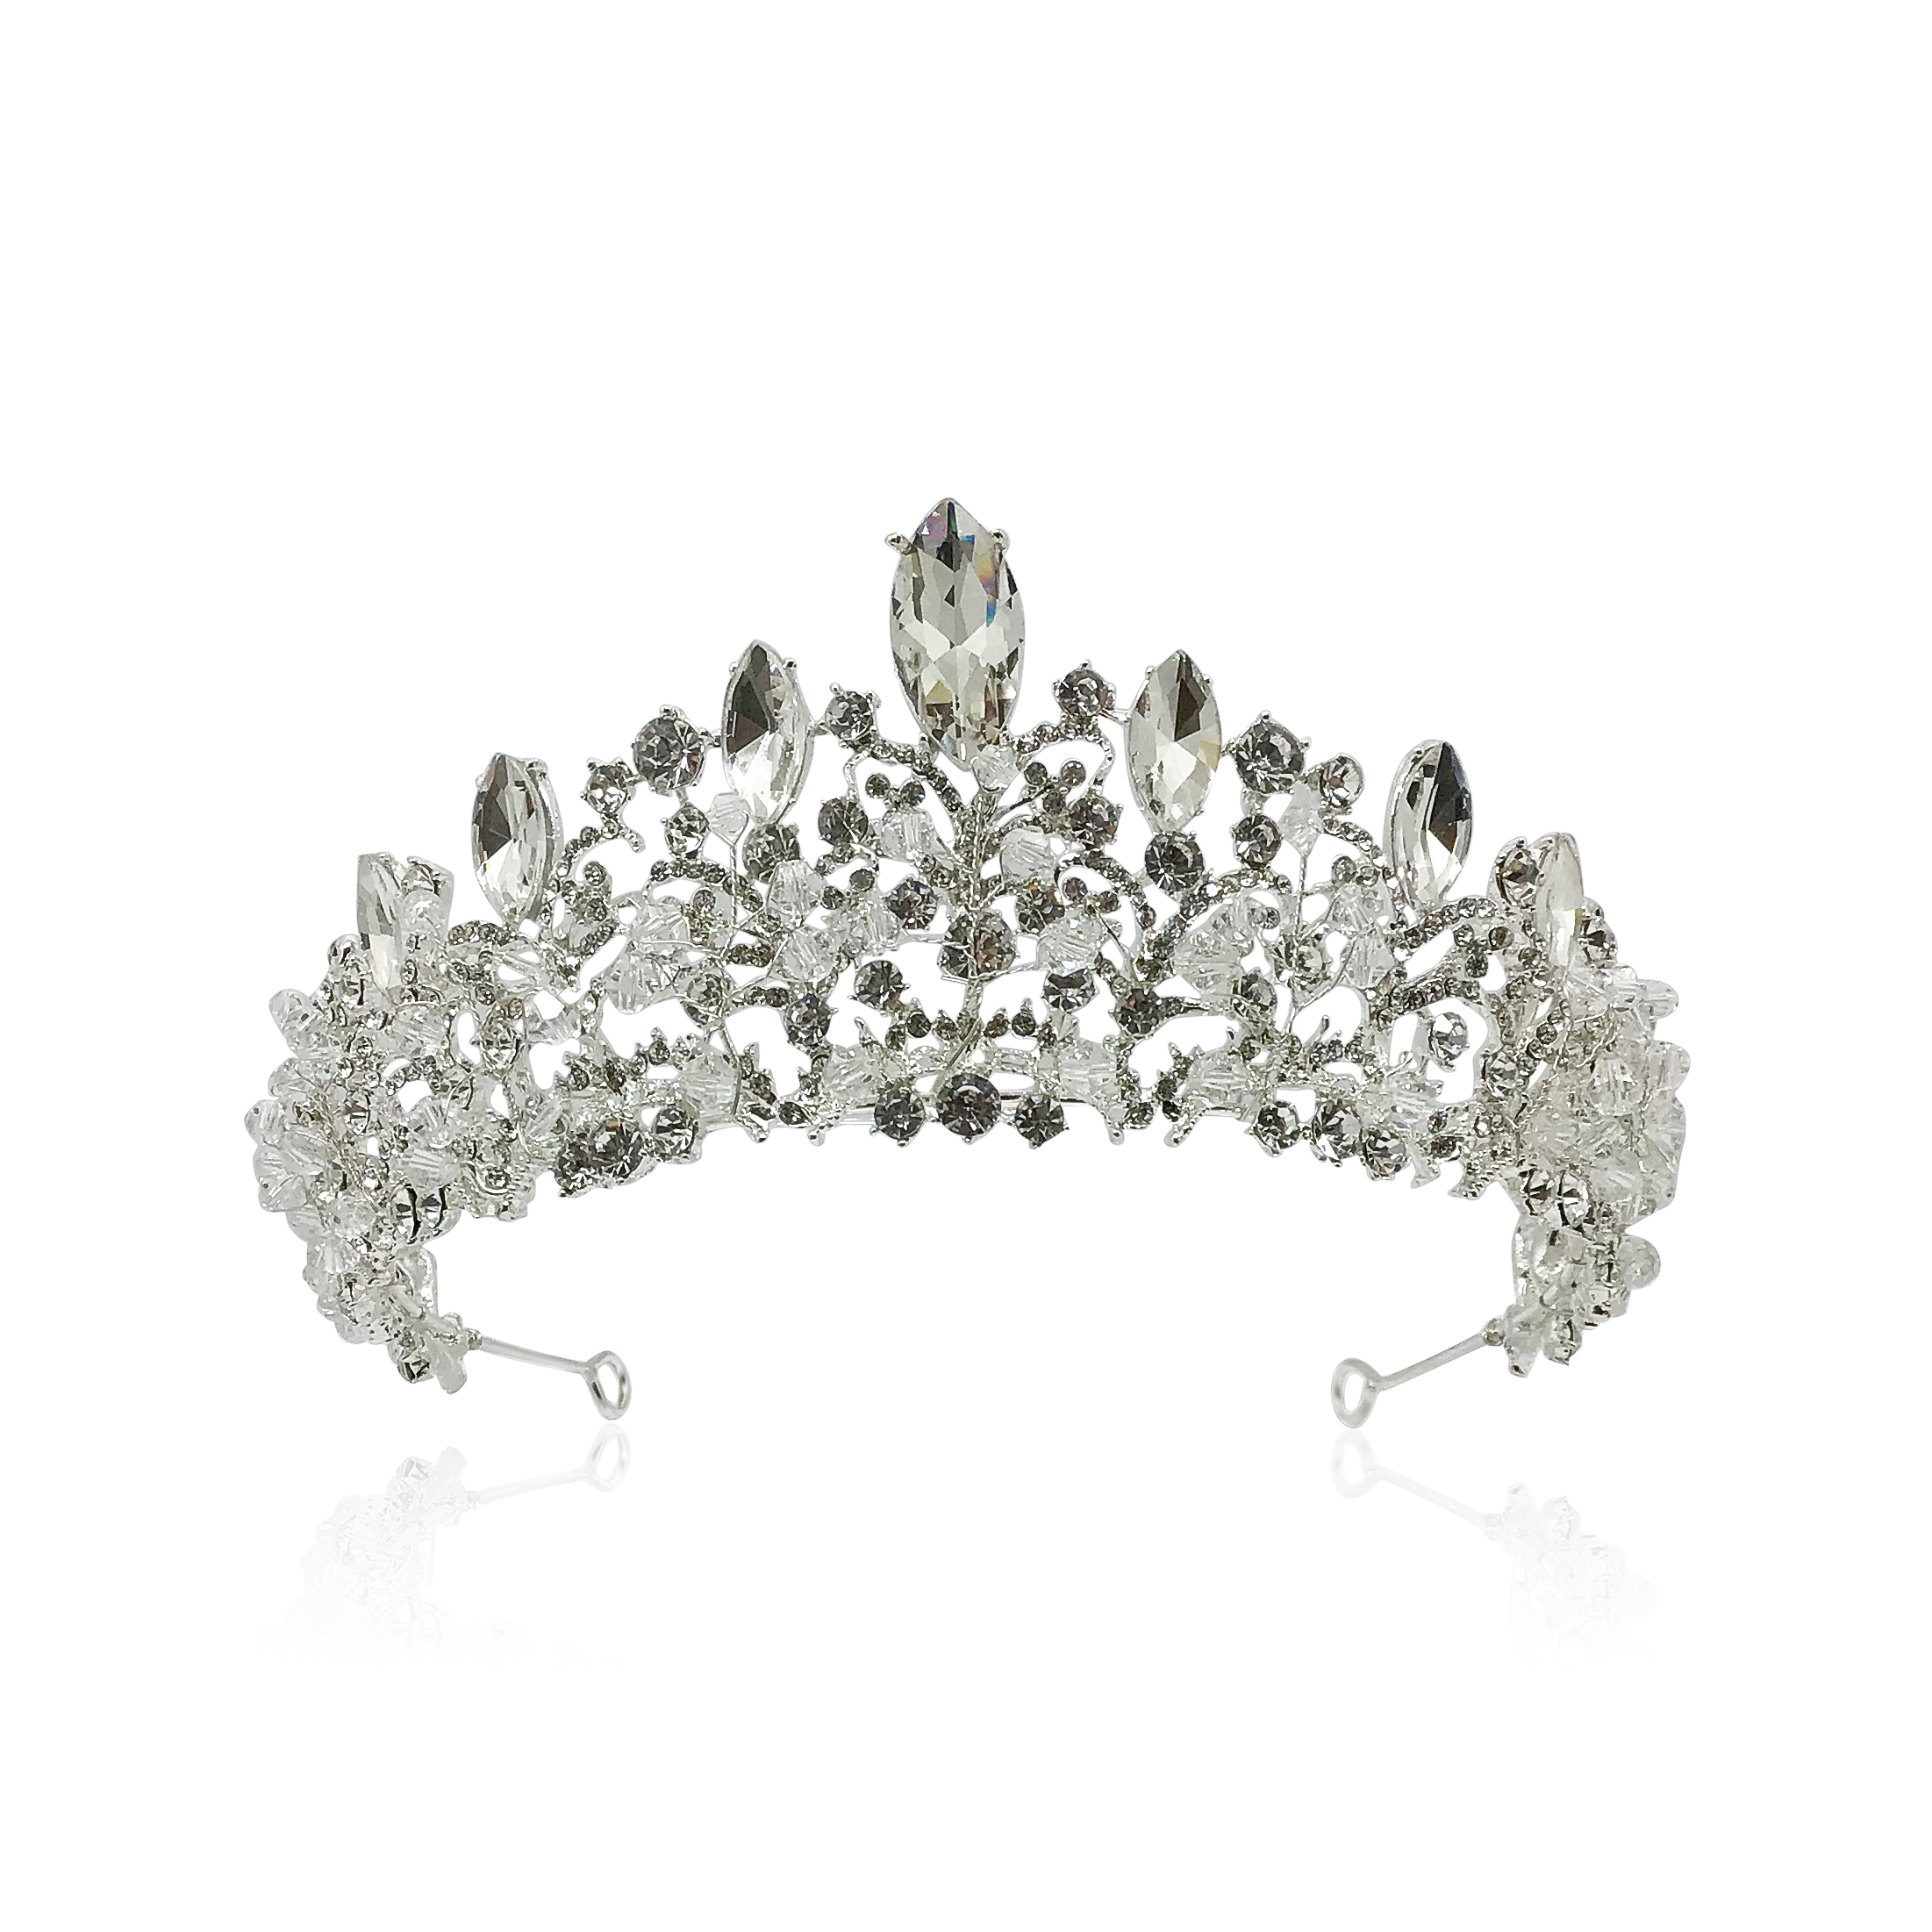 Crystal Wedding Crown|Isadora|Jeanette Maree|Shop Online